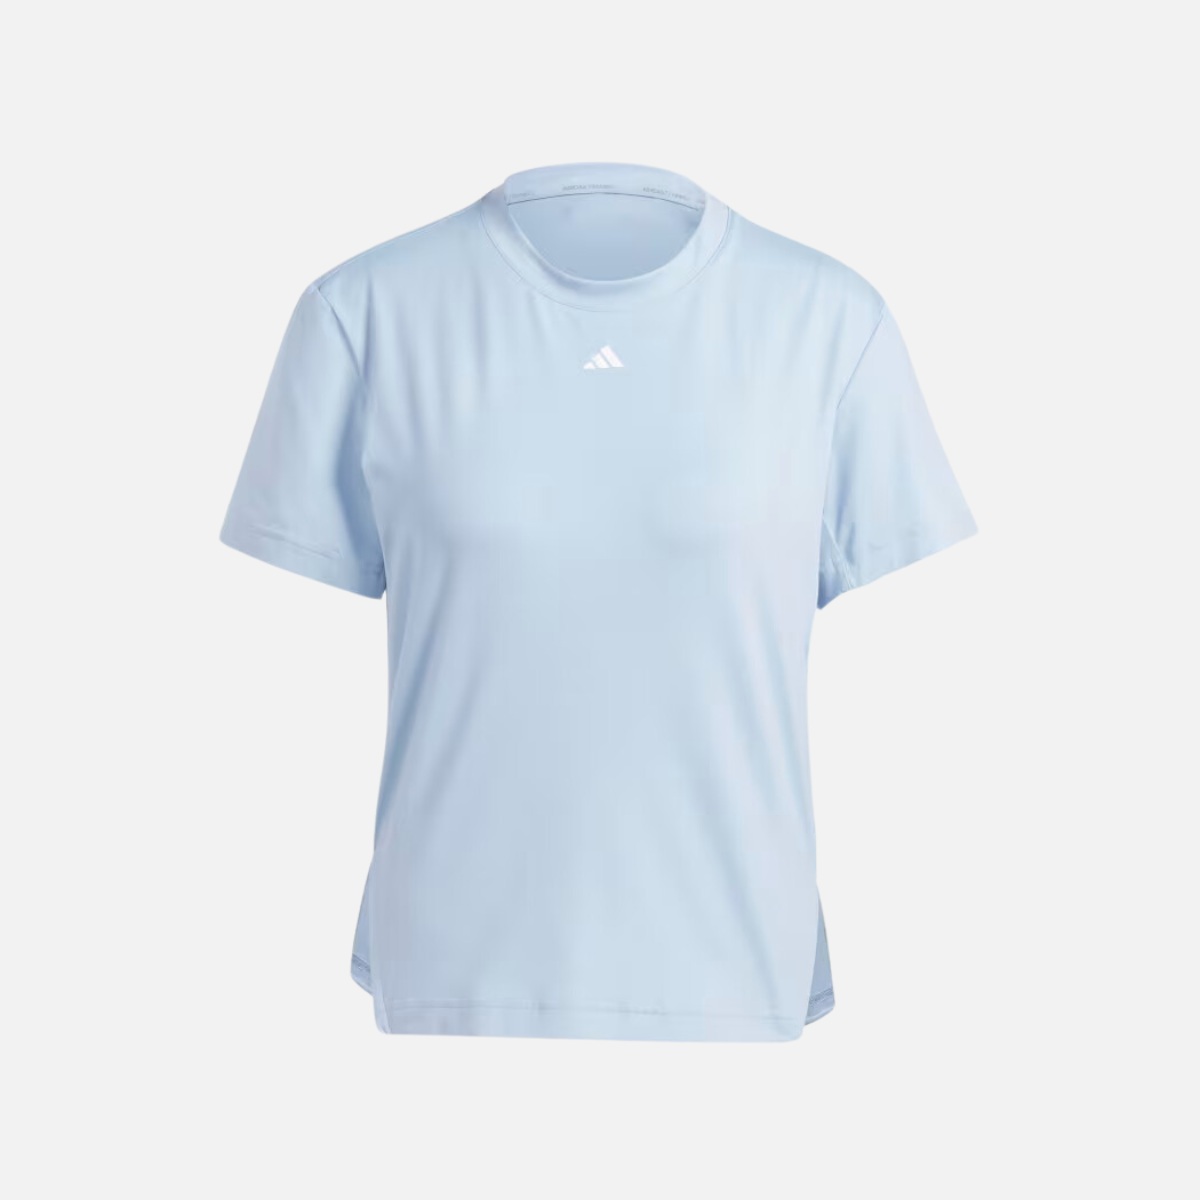 Adidas Versatile Women's Training T-shirt -Wonder Blue/White